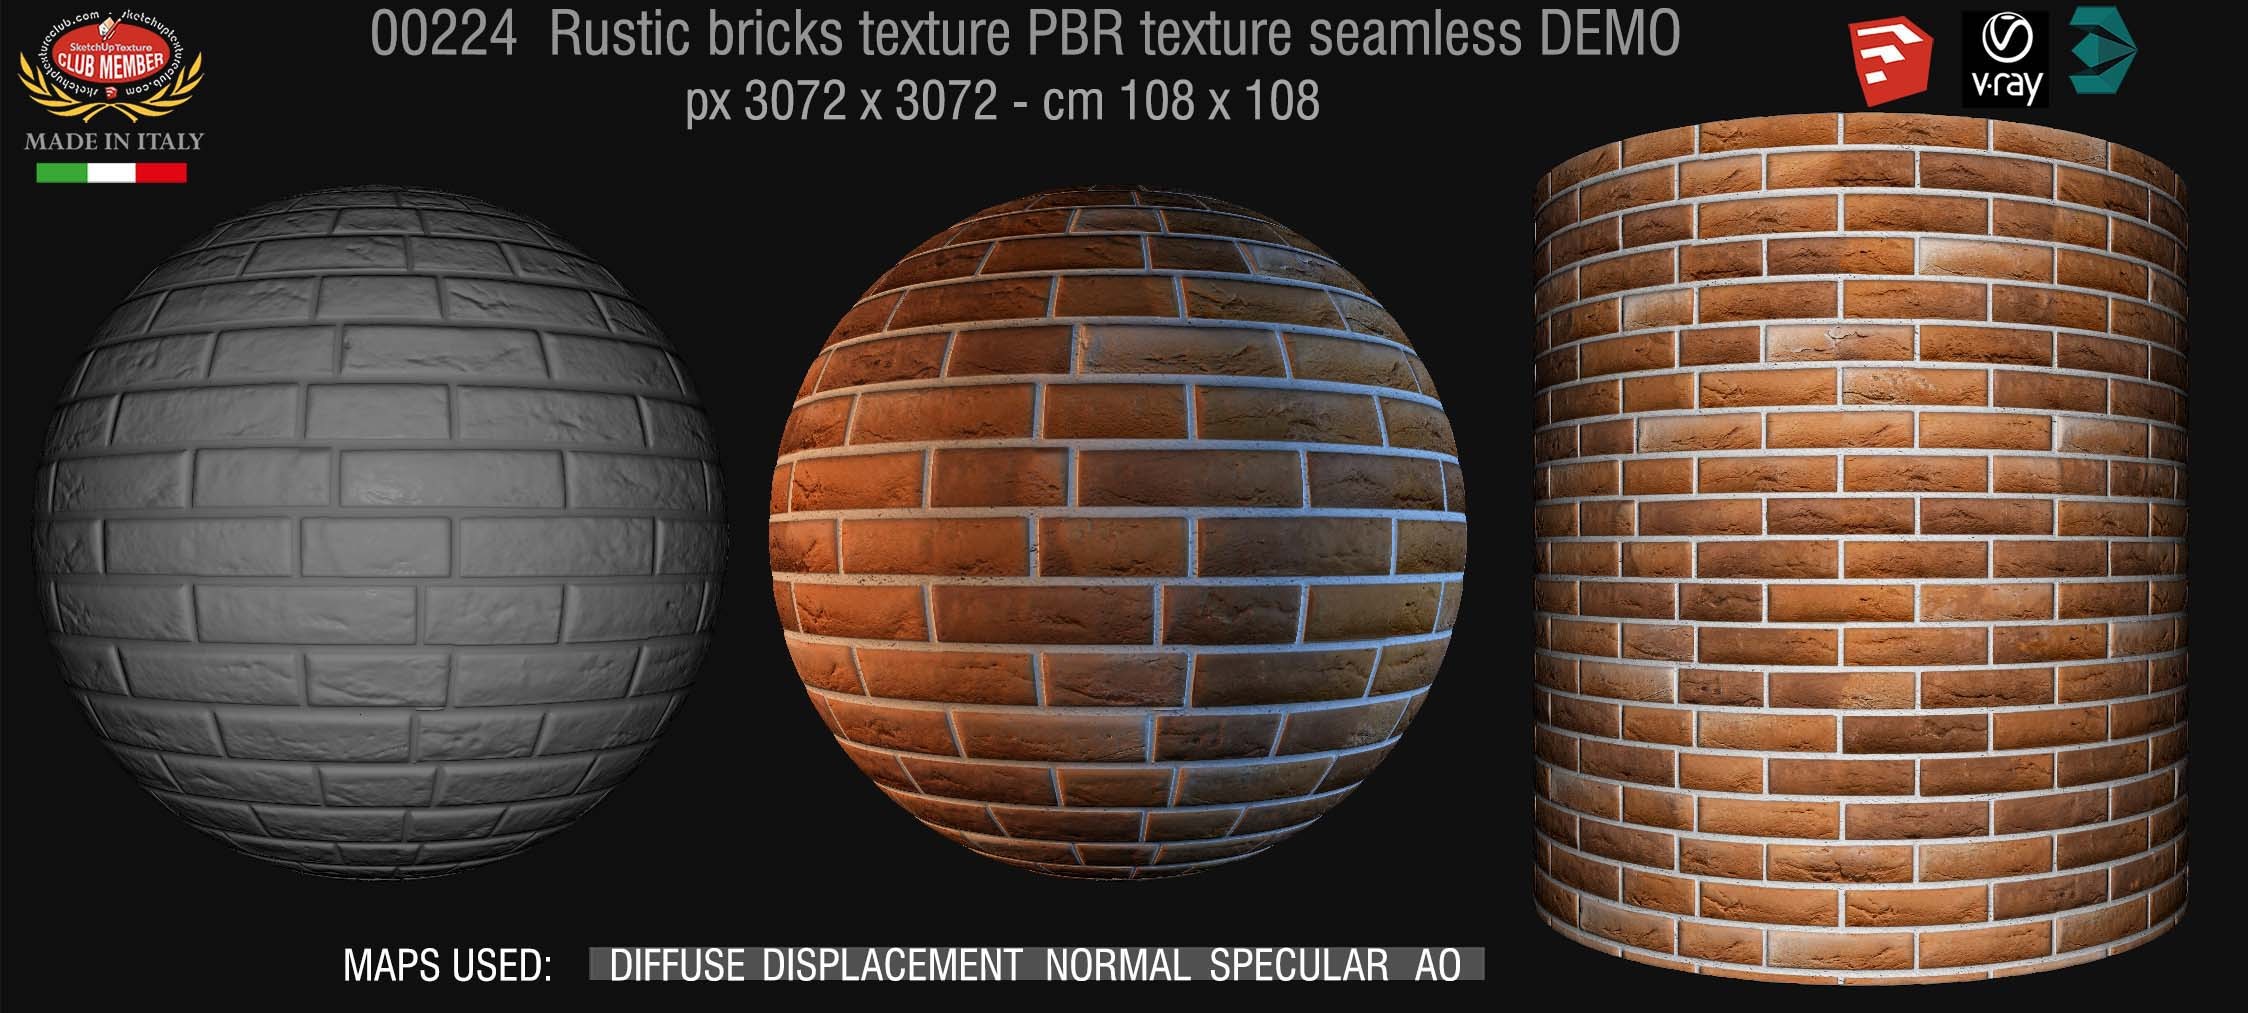 00224 rustic bricks PBR texture seamless DEMO